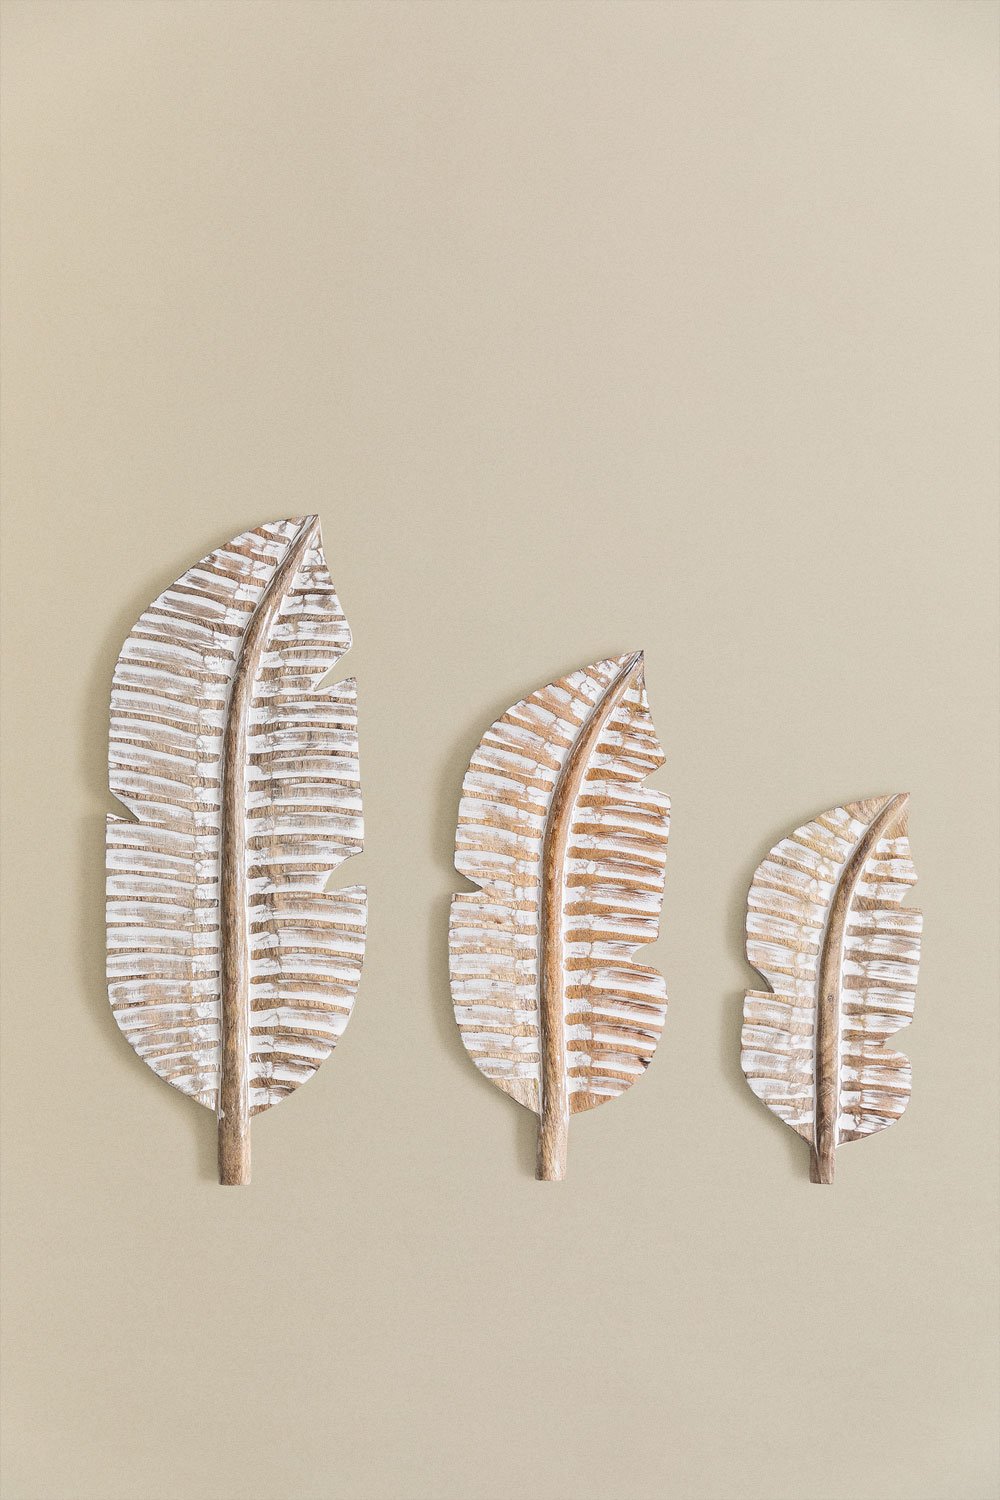  Set of 3 Mango Wood Figures Tafis, gallery image 1